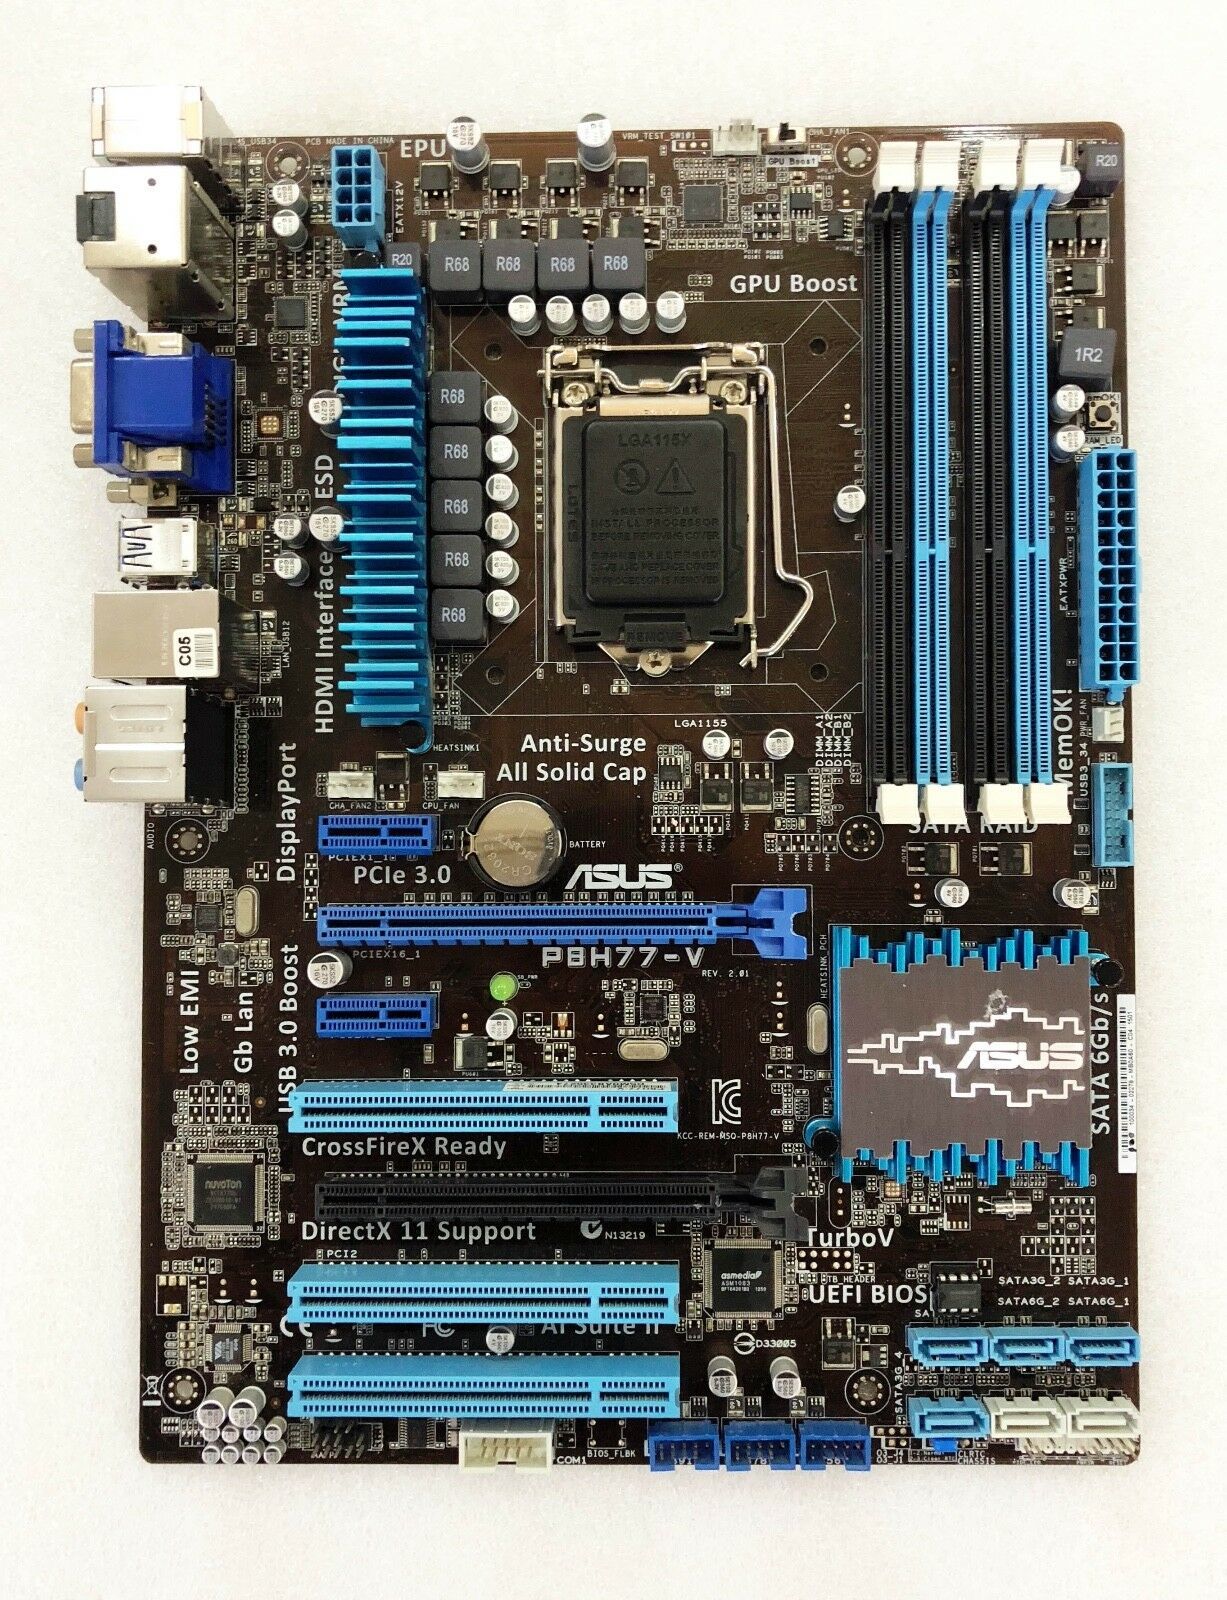 ASUS P8H77-V Intel Motherboard ATX LGA 1155 Socket H2 - $108.89